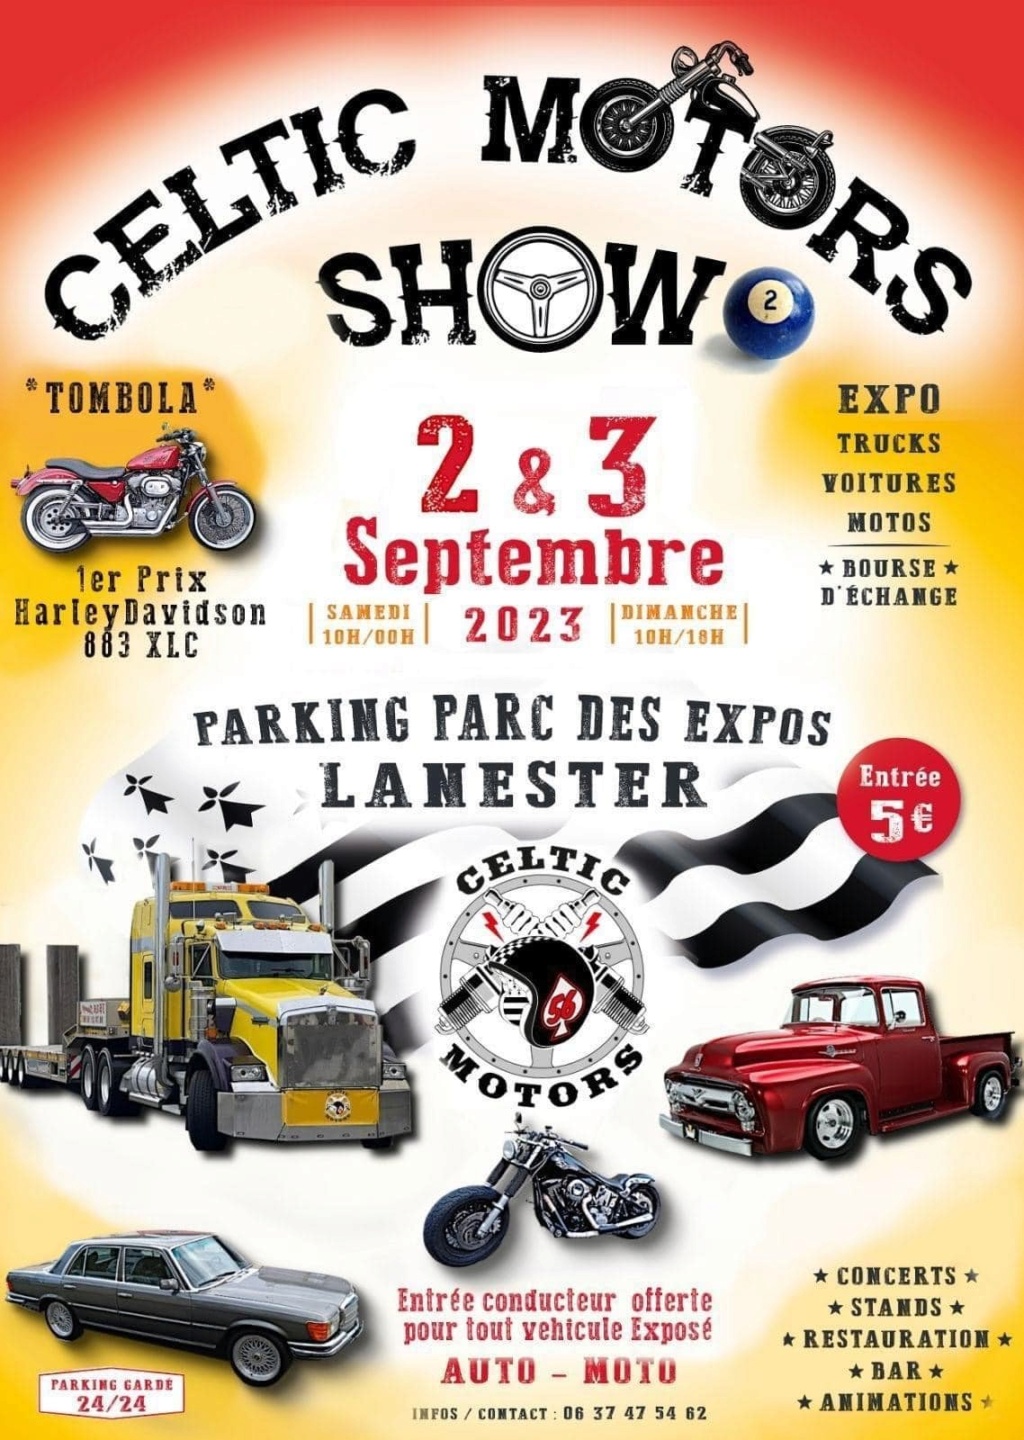 MANIFESTATION - Celtic Motors Show - 2 & 3 Septembre 2023 - Lanester -  Visuel12